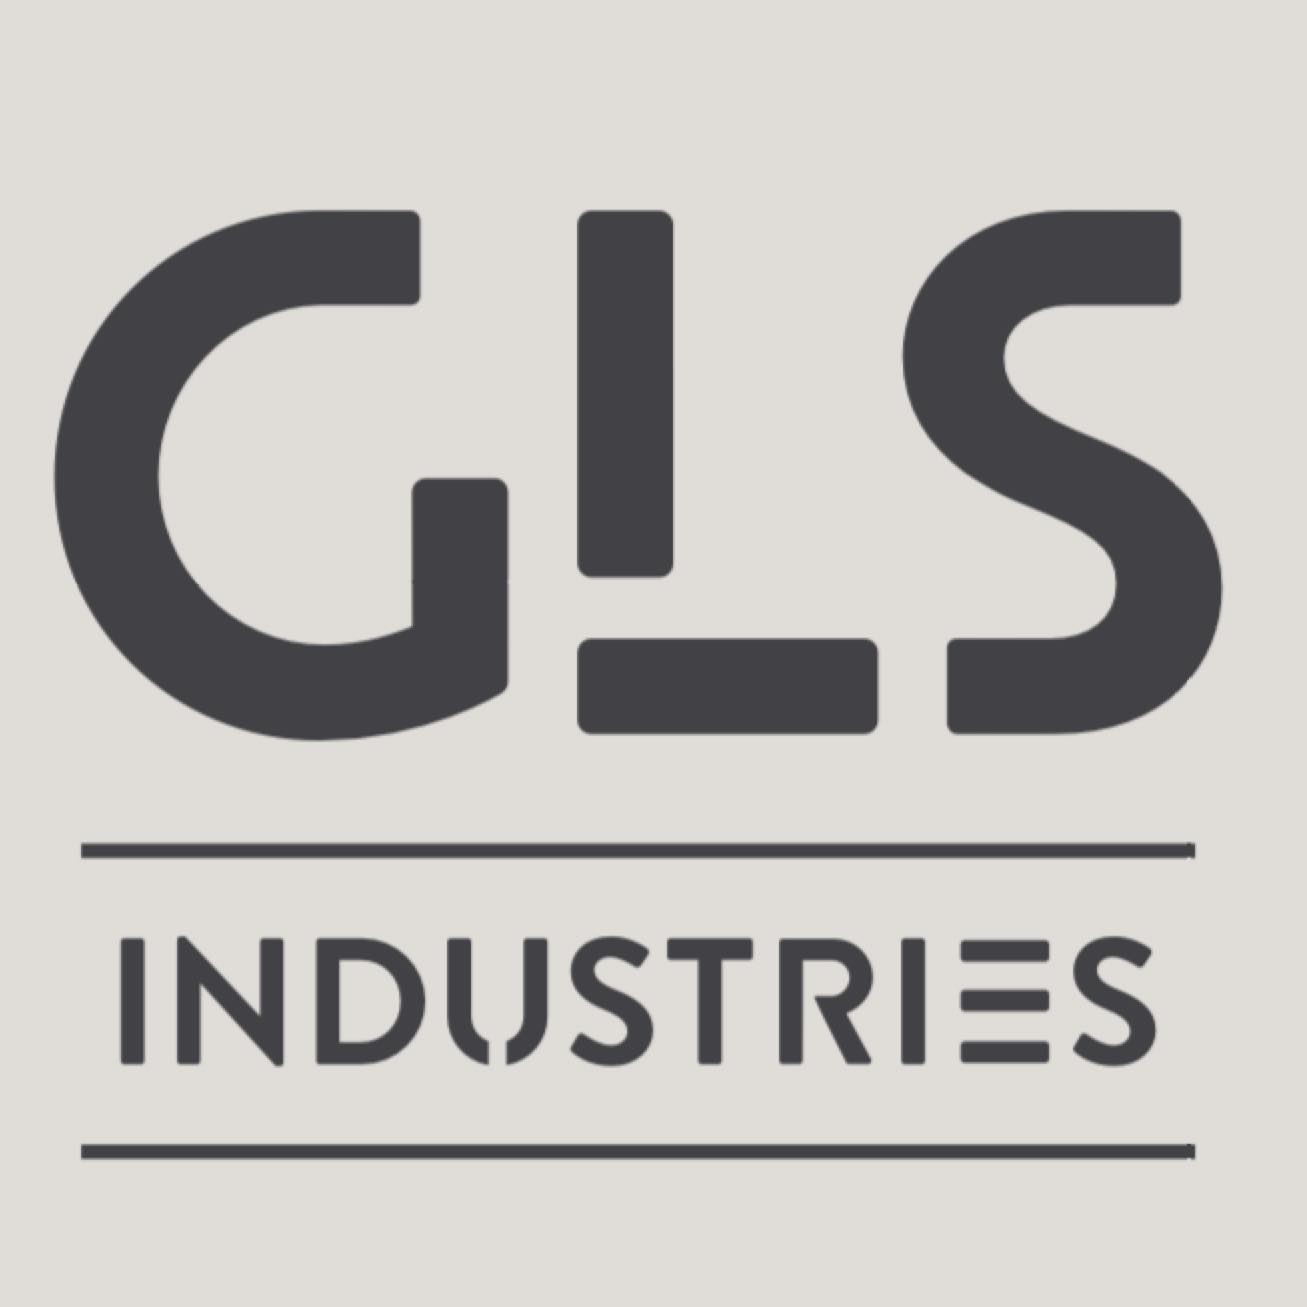 Gls Industries Ab